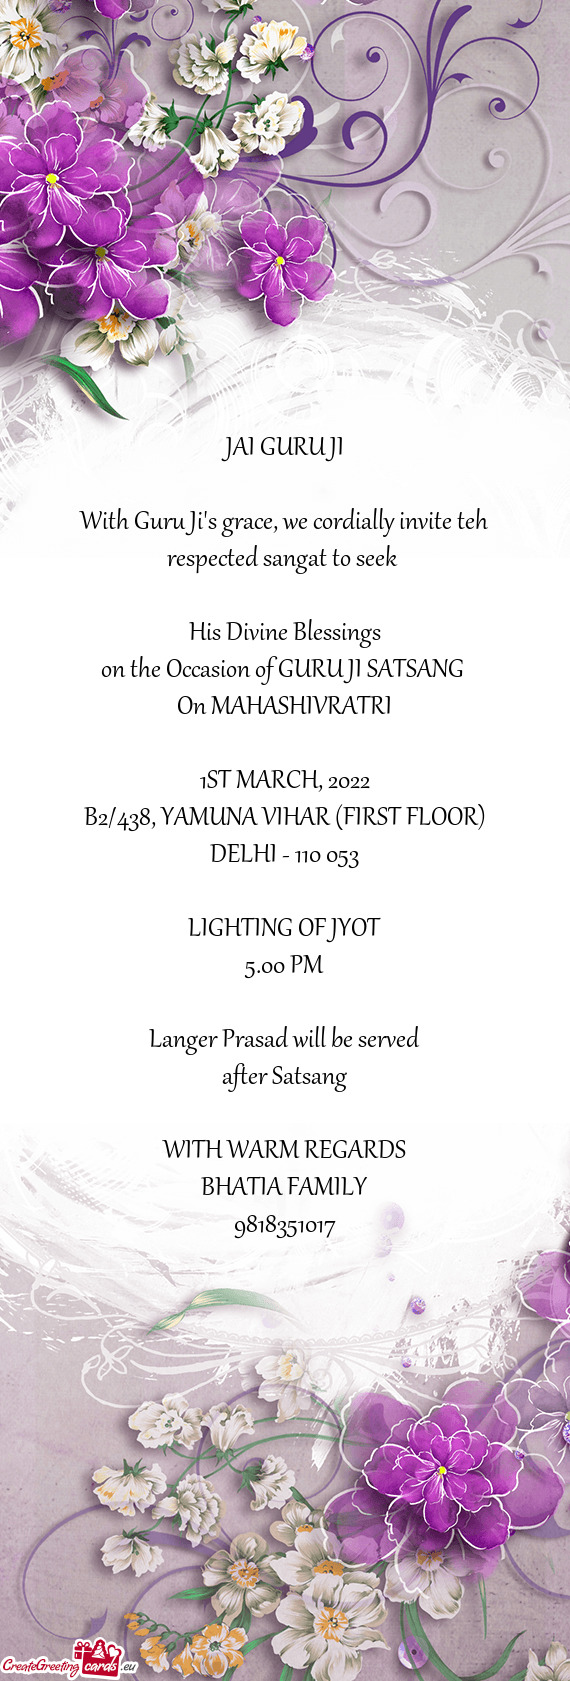 On the Occasion of GURU JI SATSANG